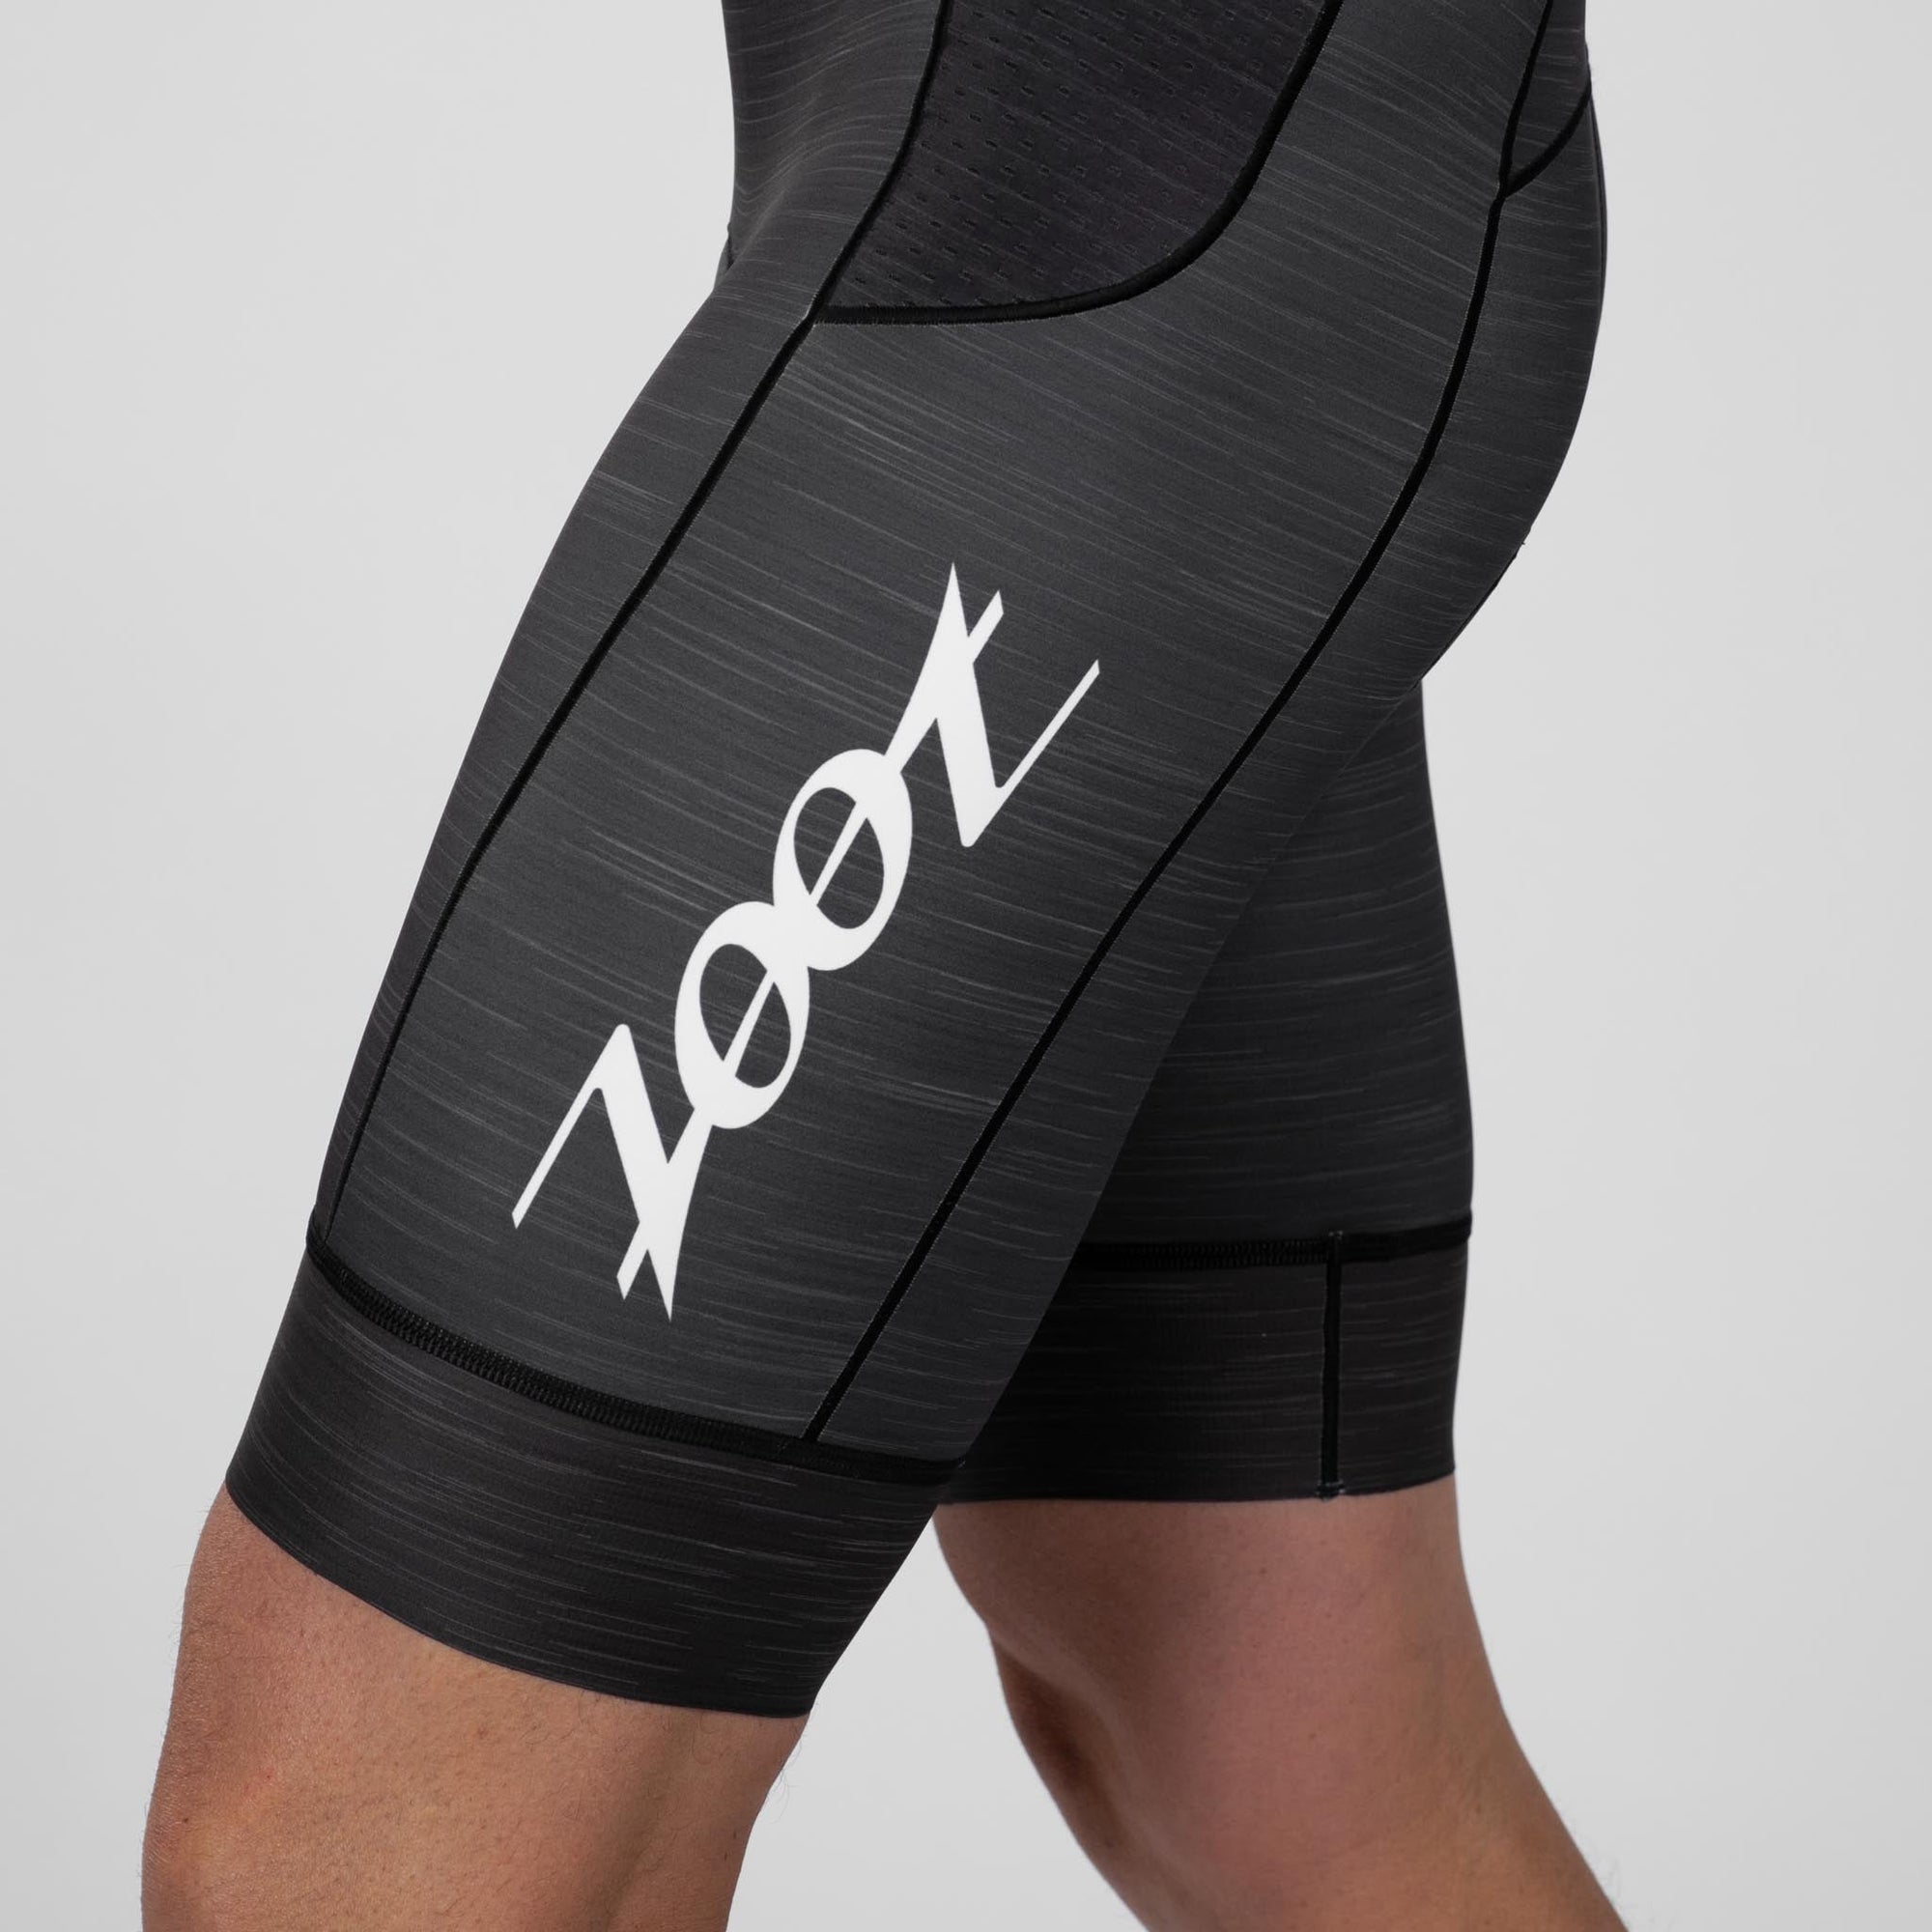 Zoot Sports TRI RACESUITS Men's Ltd Tri Aero Fz Racesuit - Groom